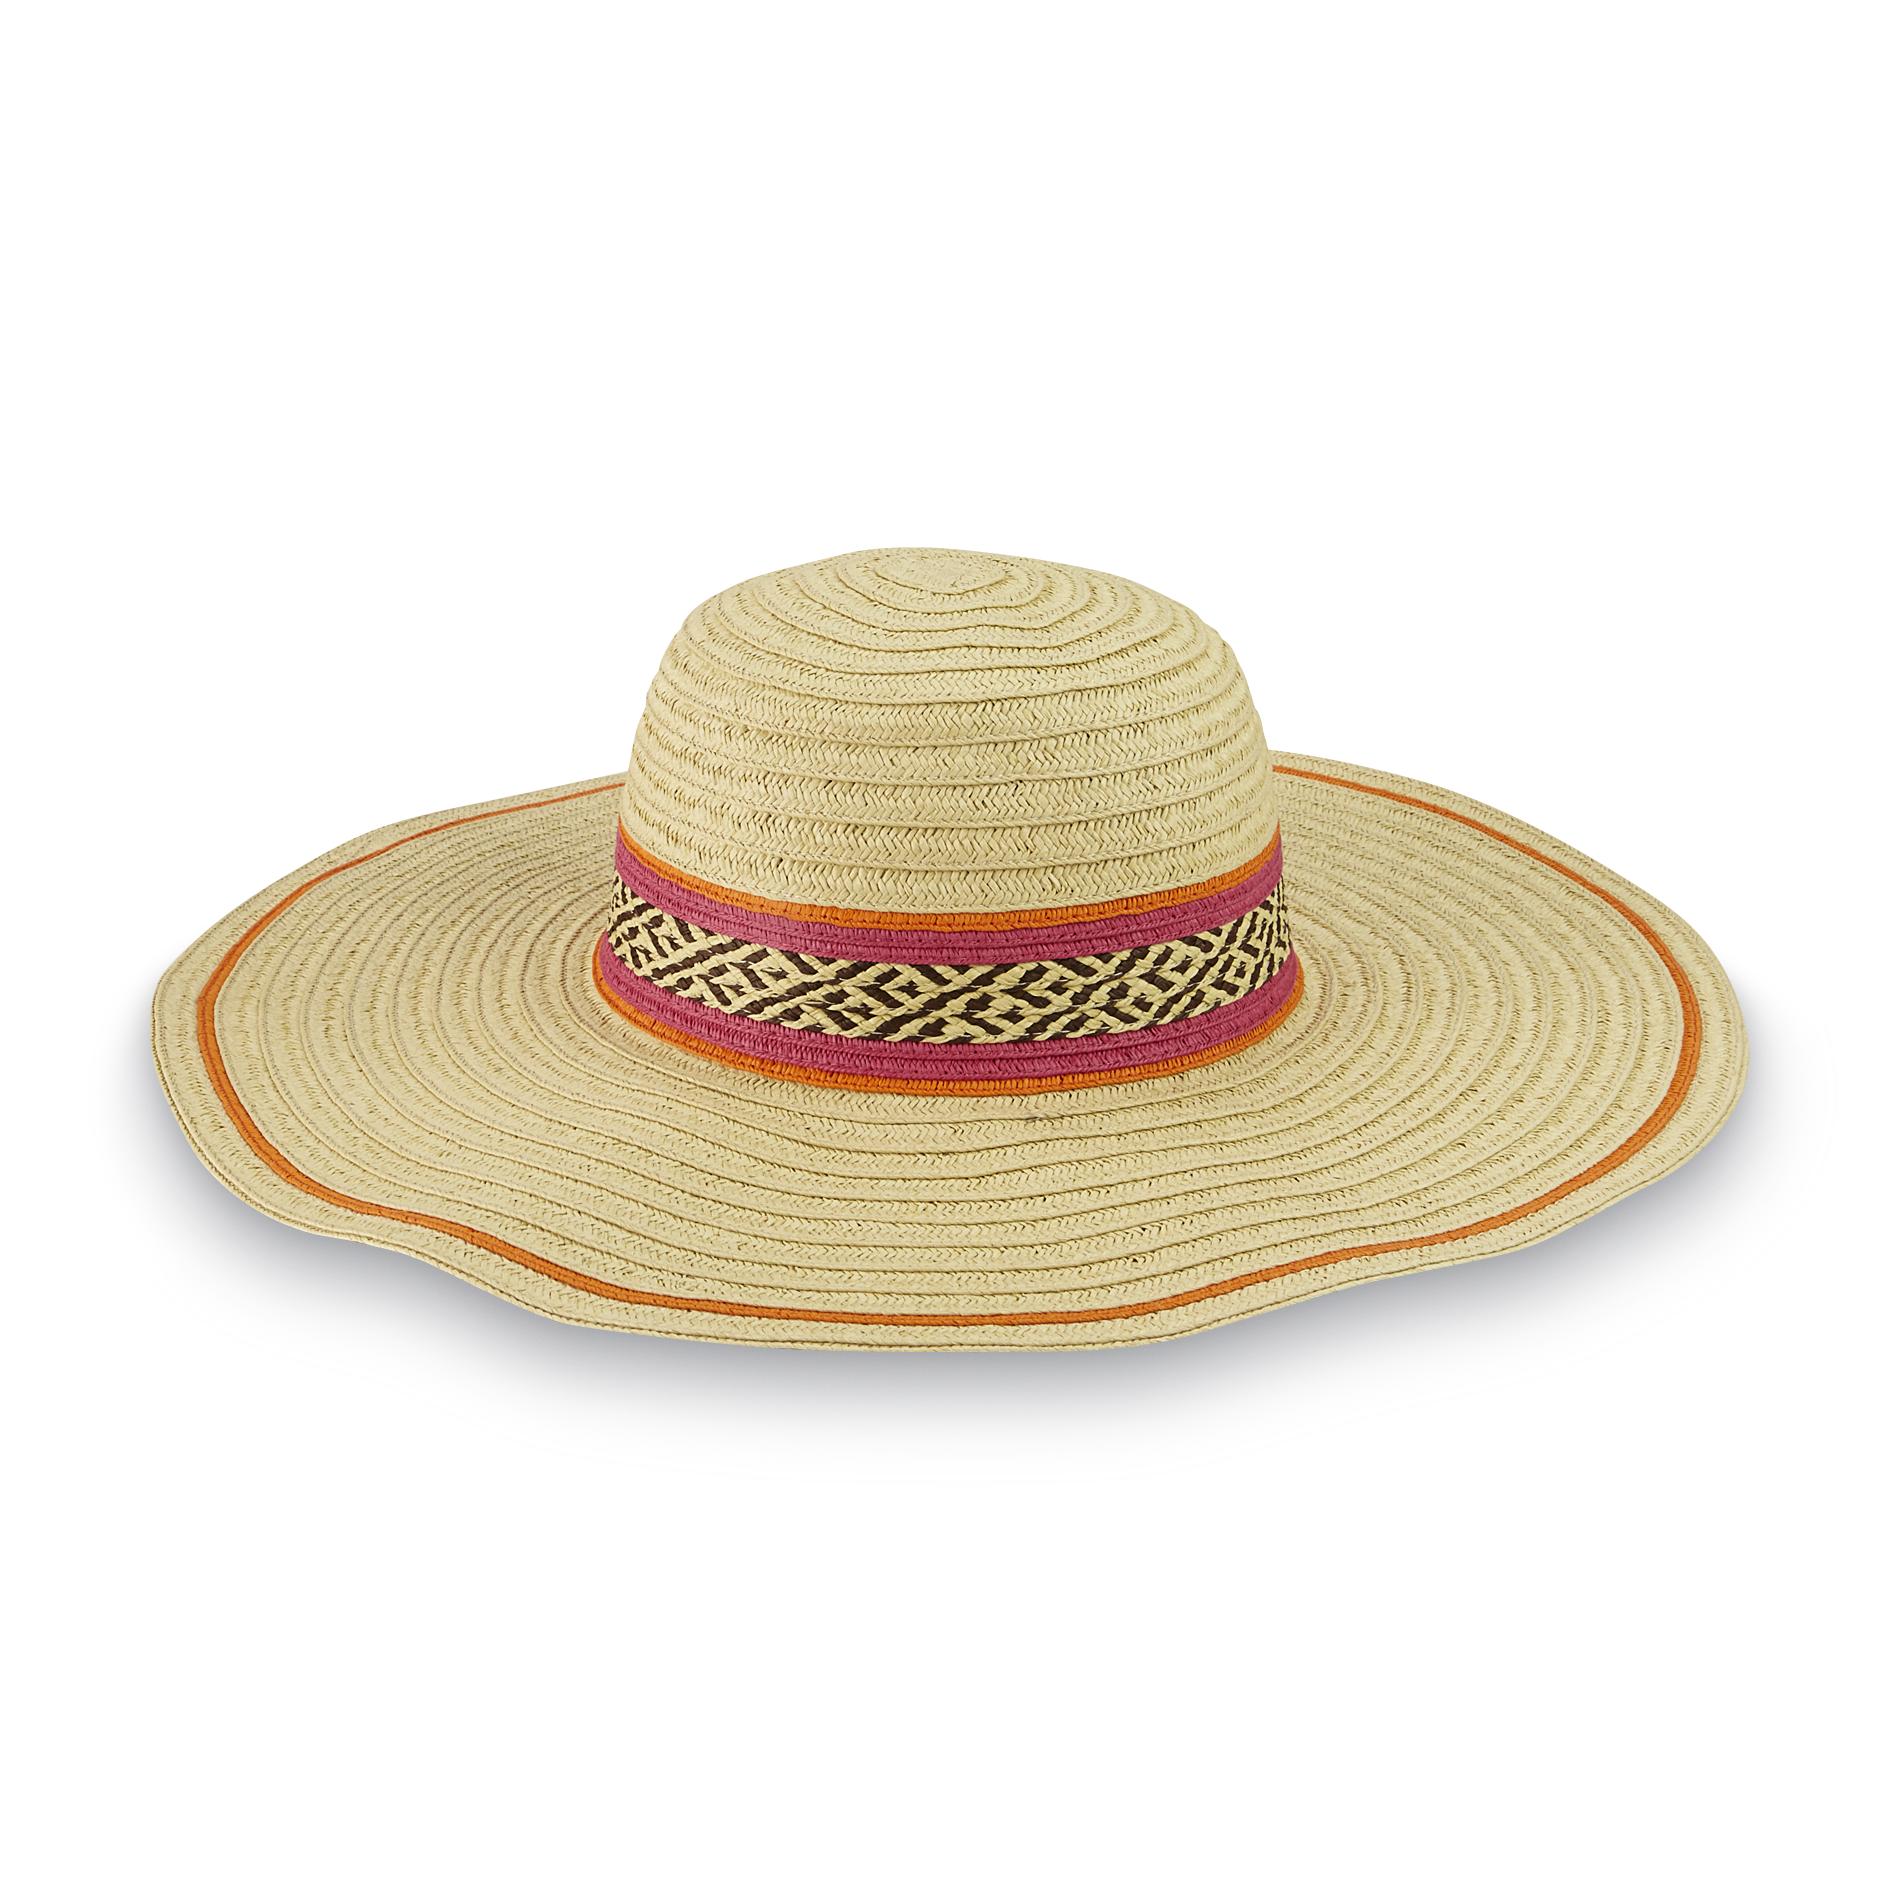 Joe Boxer Women's Woven Straw Hat - Striped